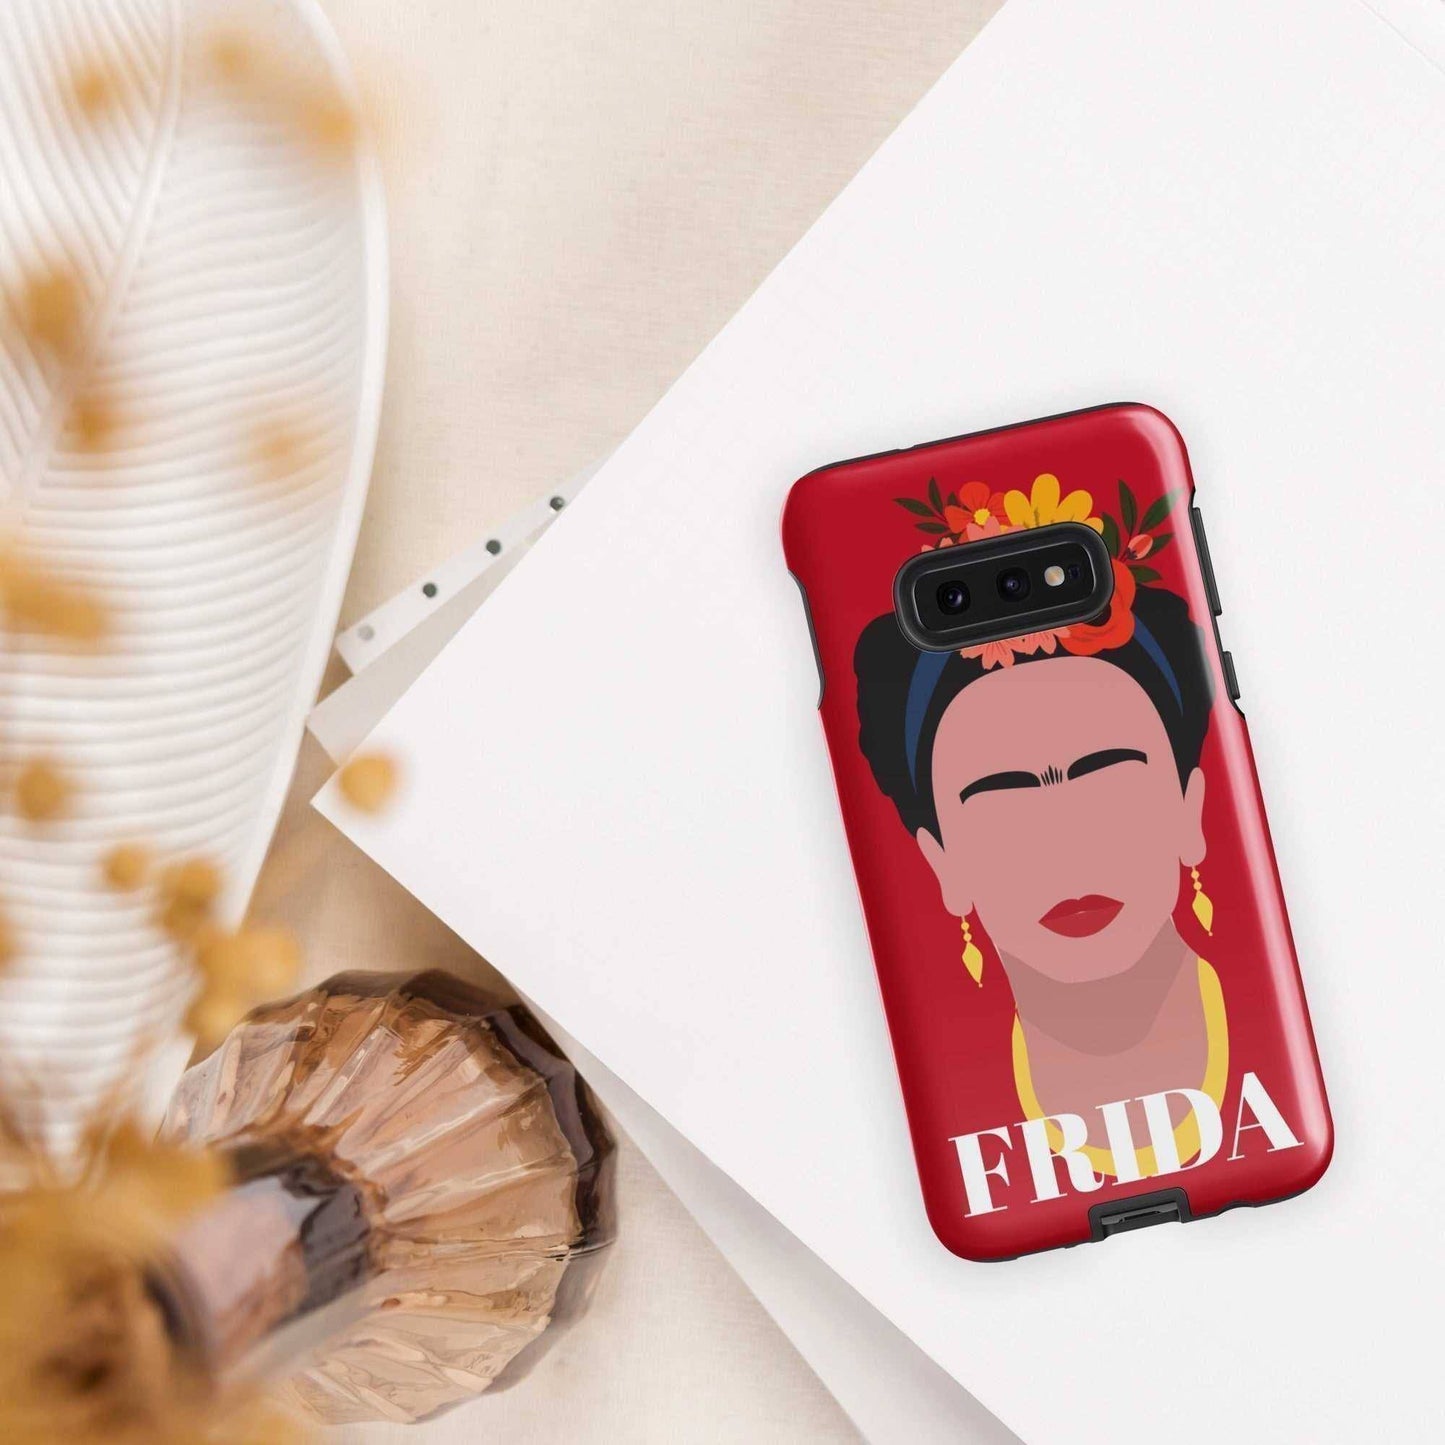 Frida Kahlo Tough case Samsung® Glossy Samsung Galaxy S10e